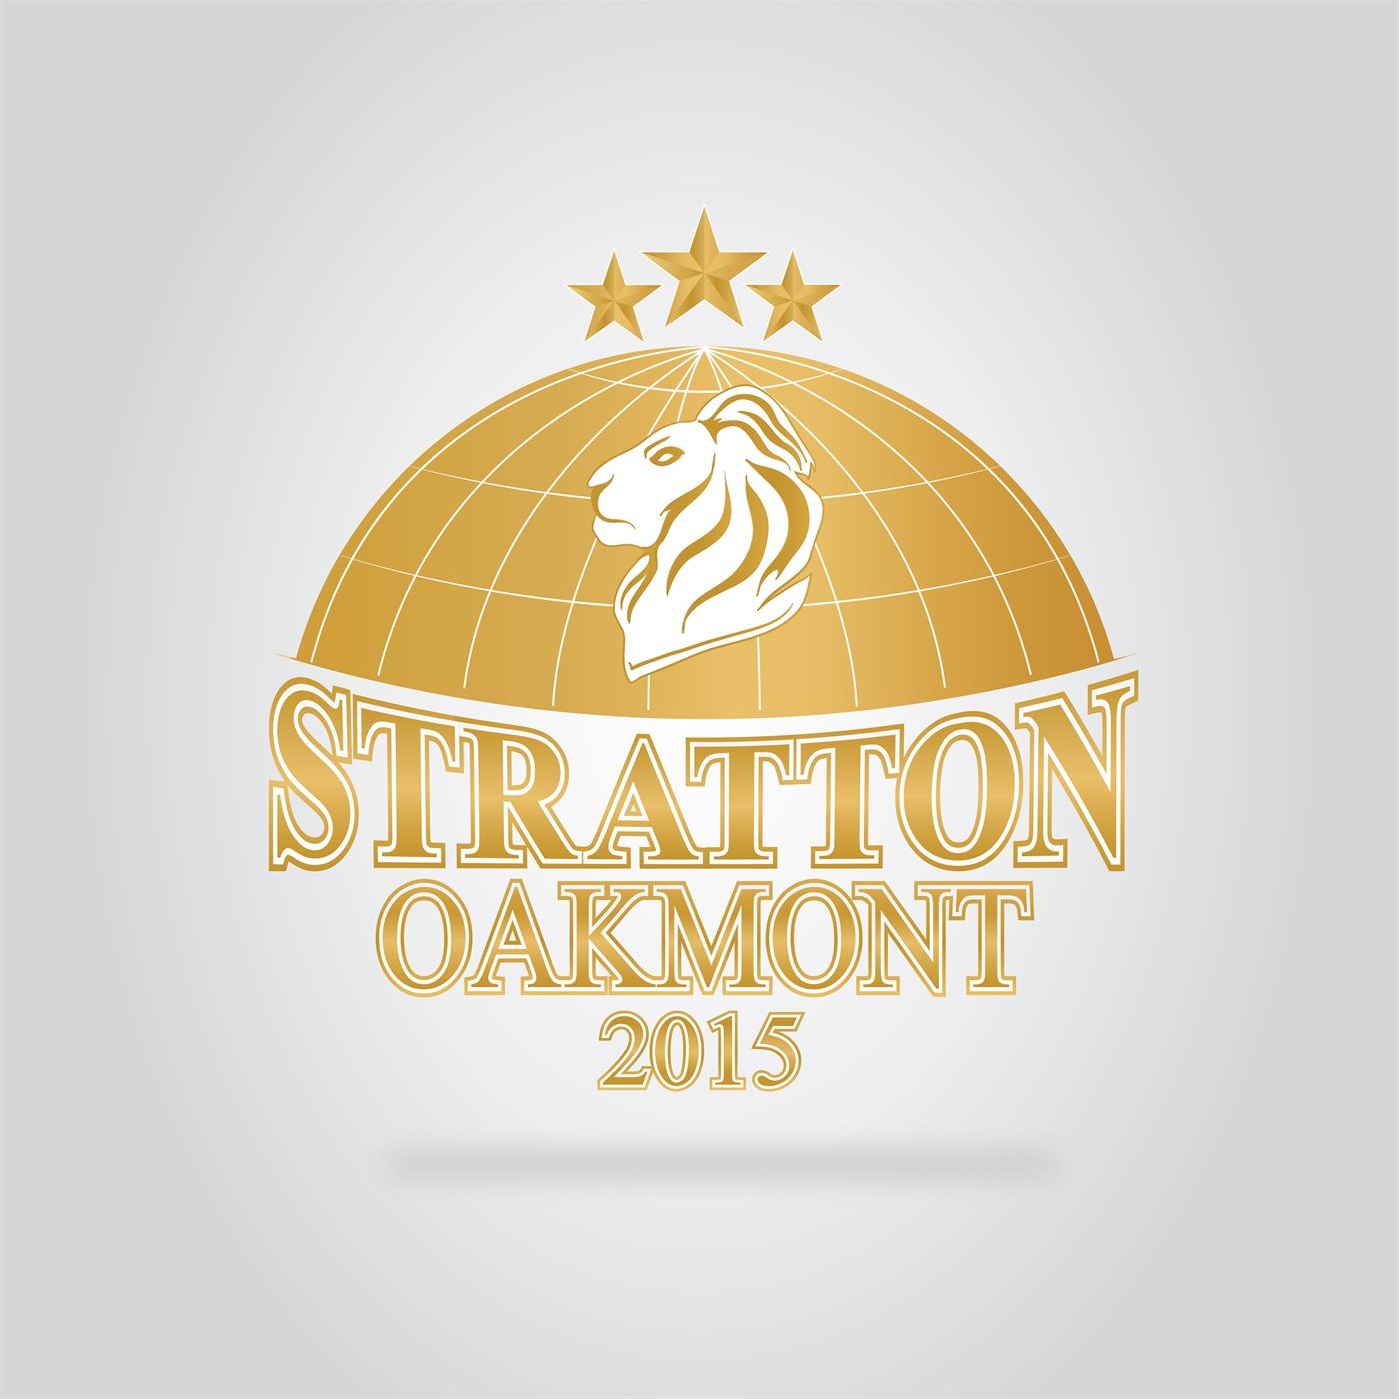 Stratton Oakmont 2015